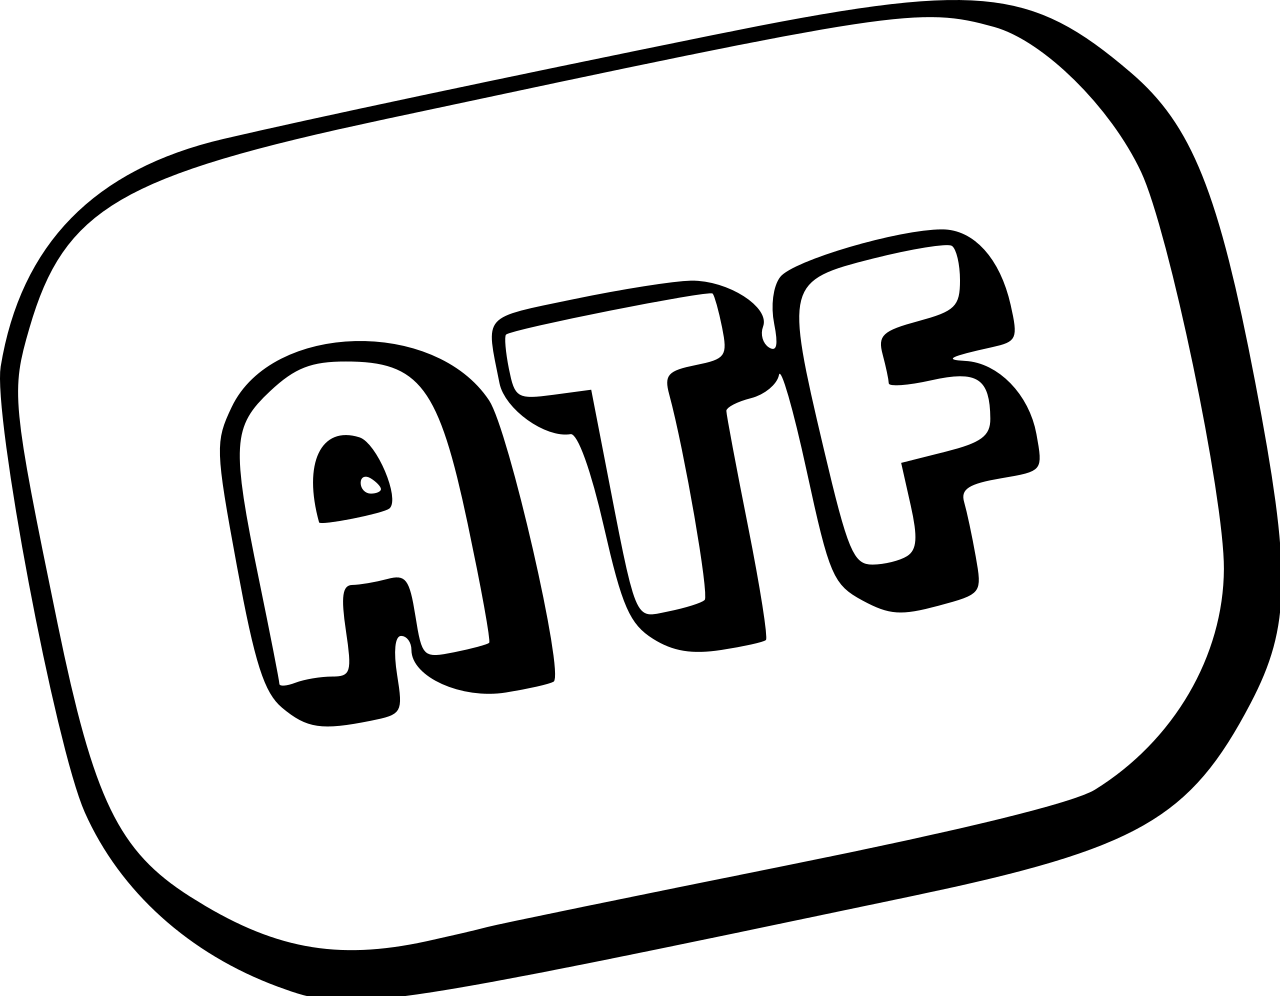 ATF Logo - File:Atf-logo.svg - Wikimedia Commons